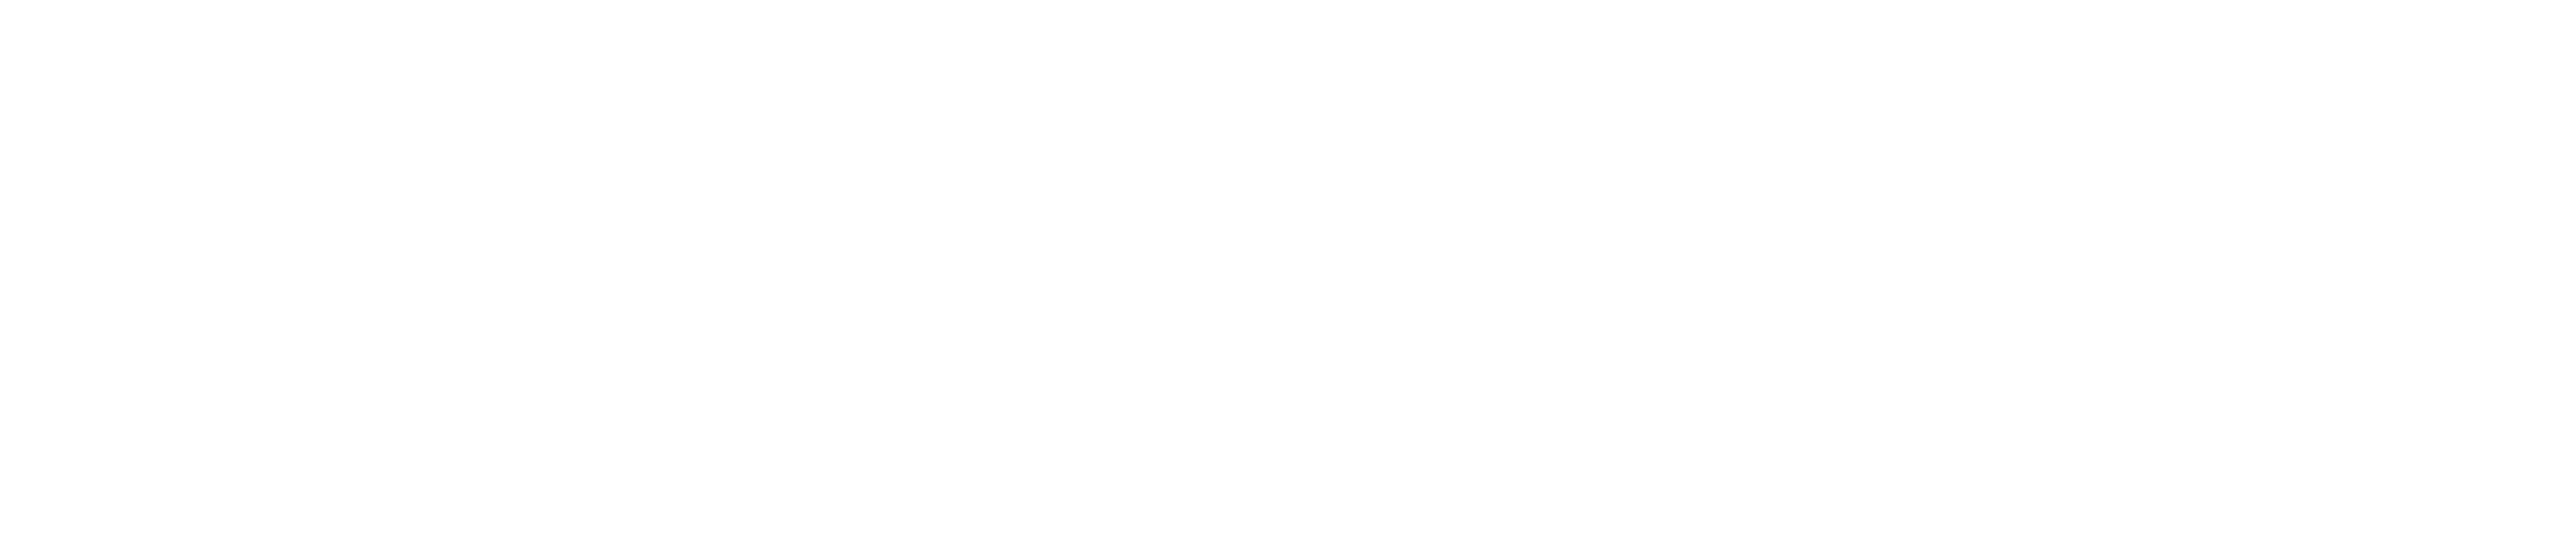 World Wide Technology logo